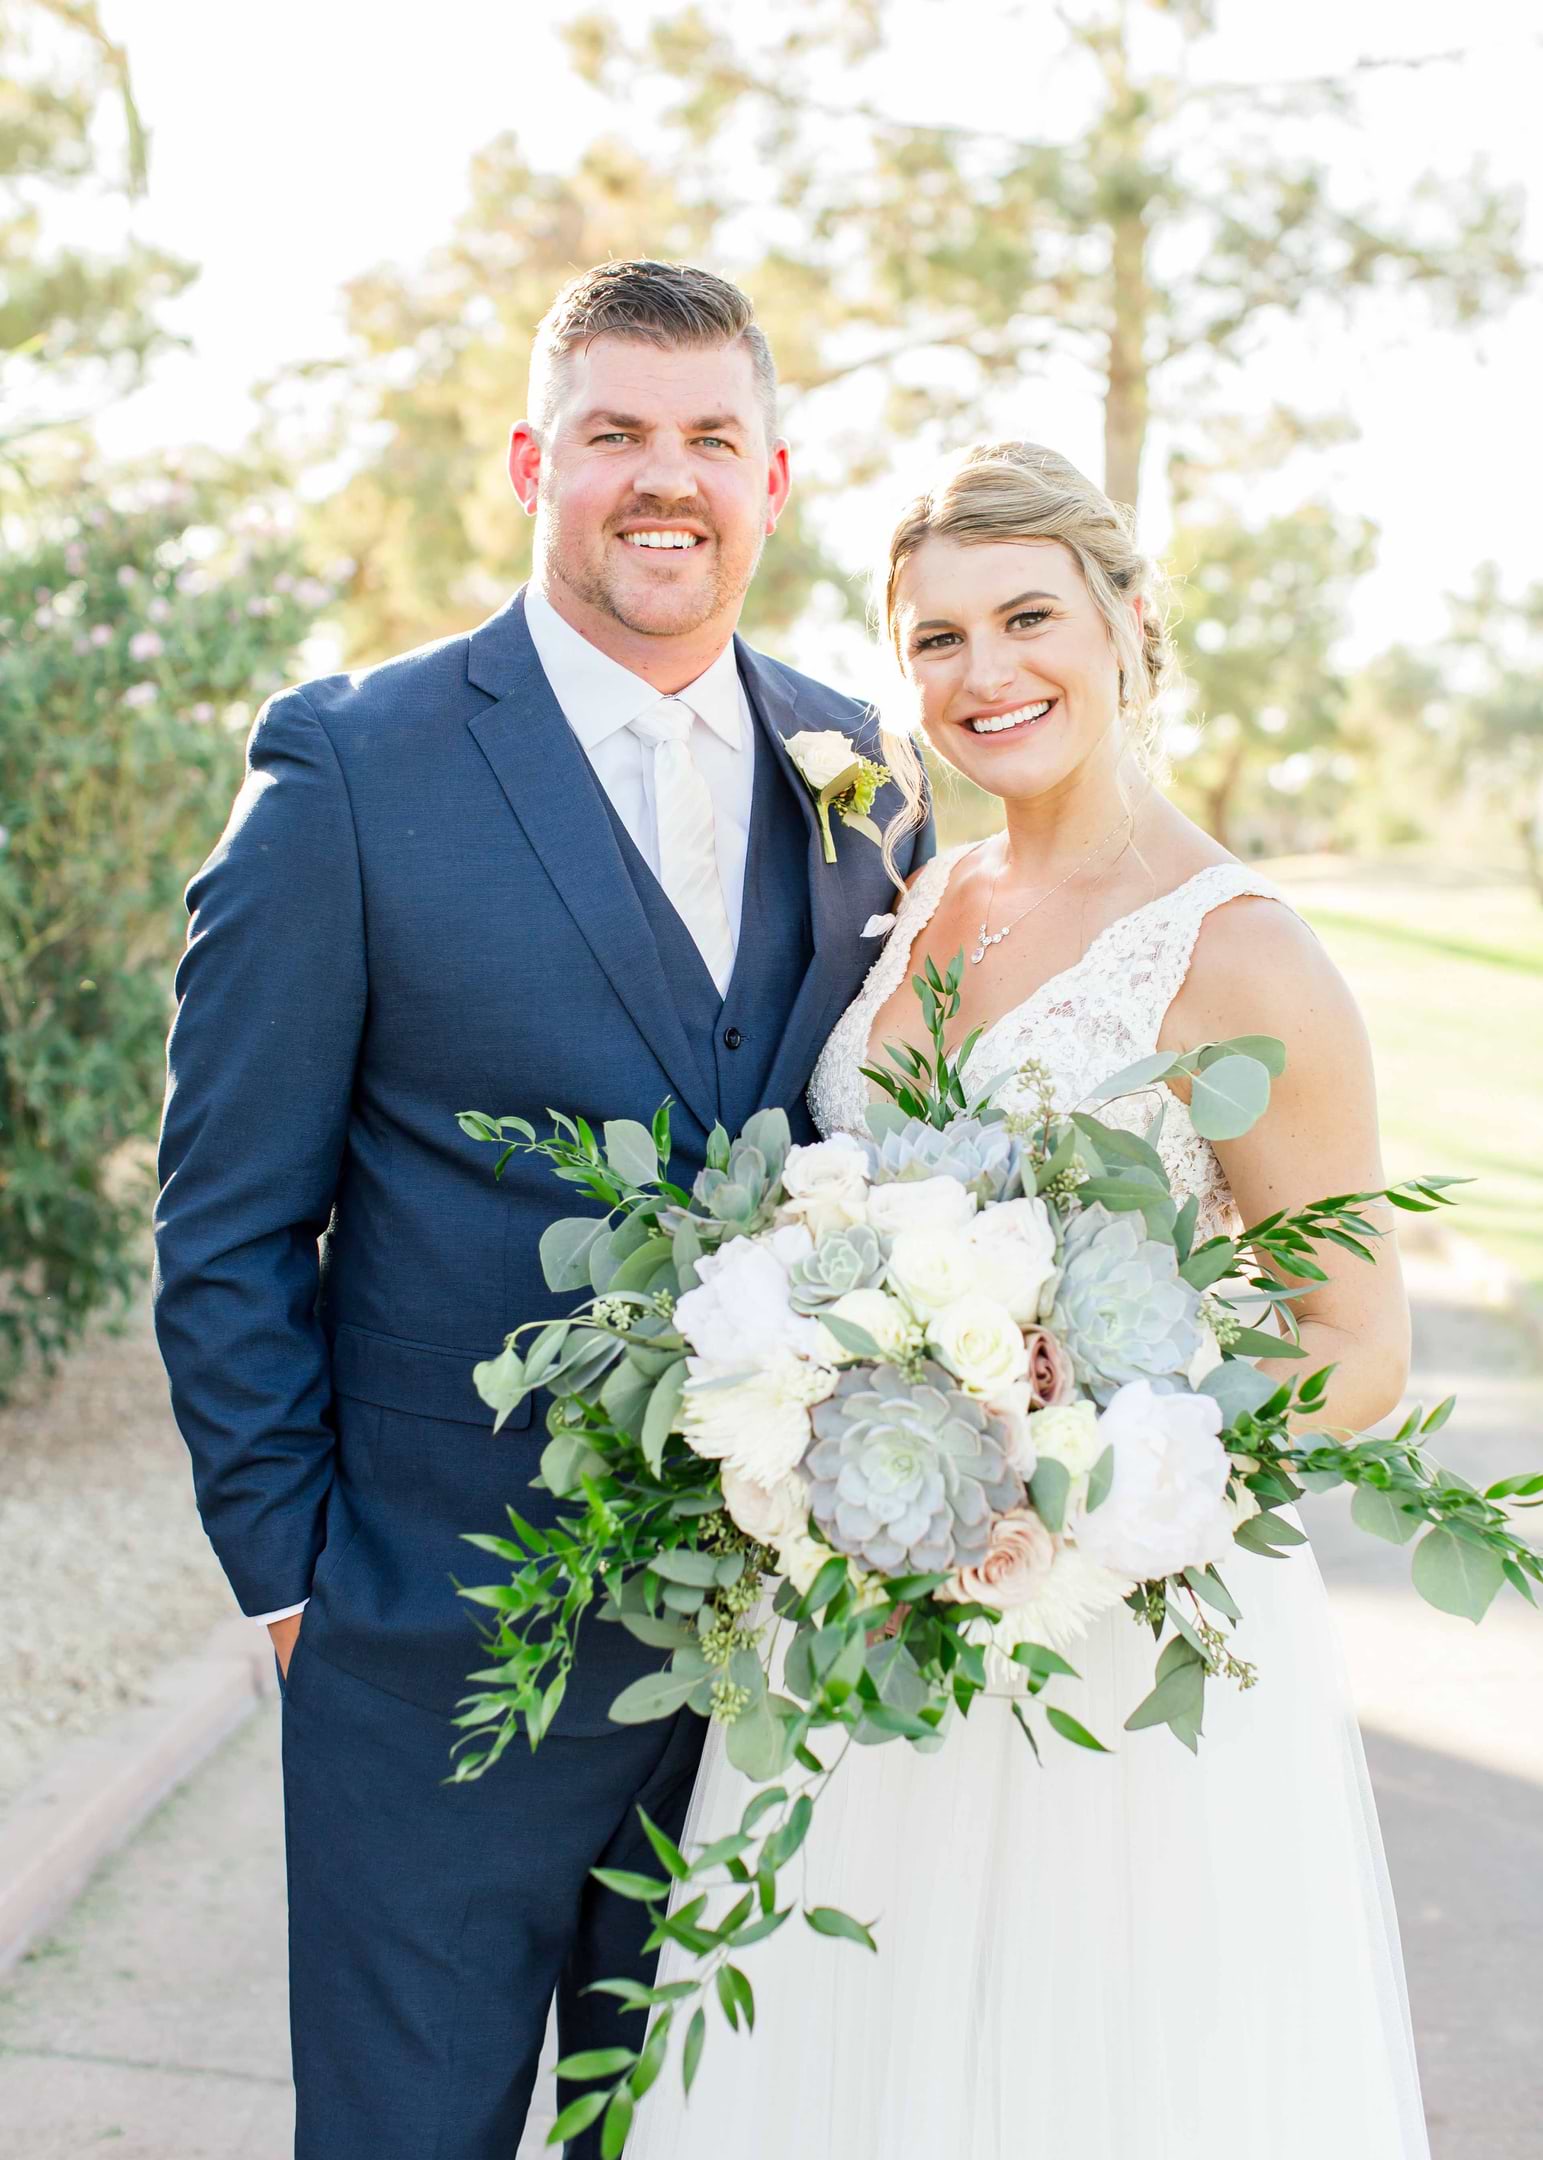 Courtney & Hunter On Their Perfect Fall Wedding Day In Arizona